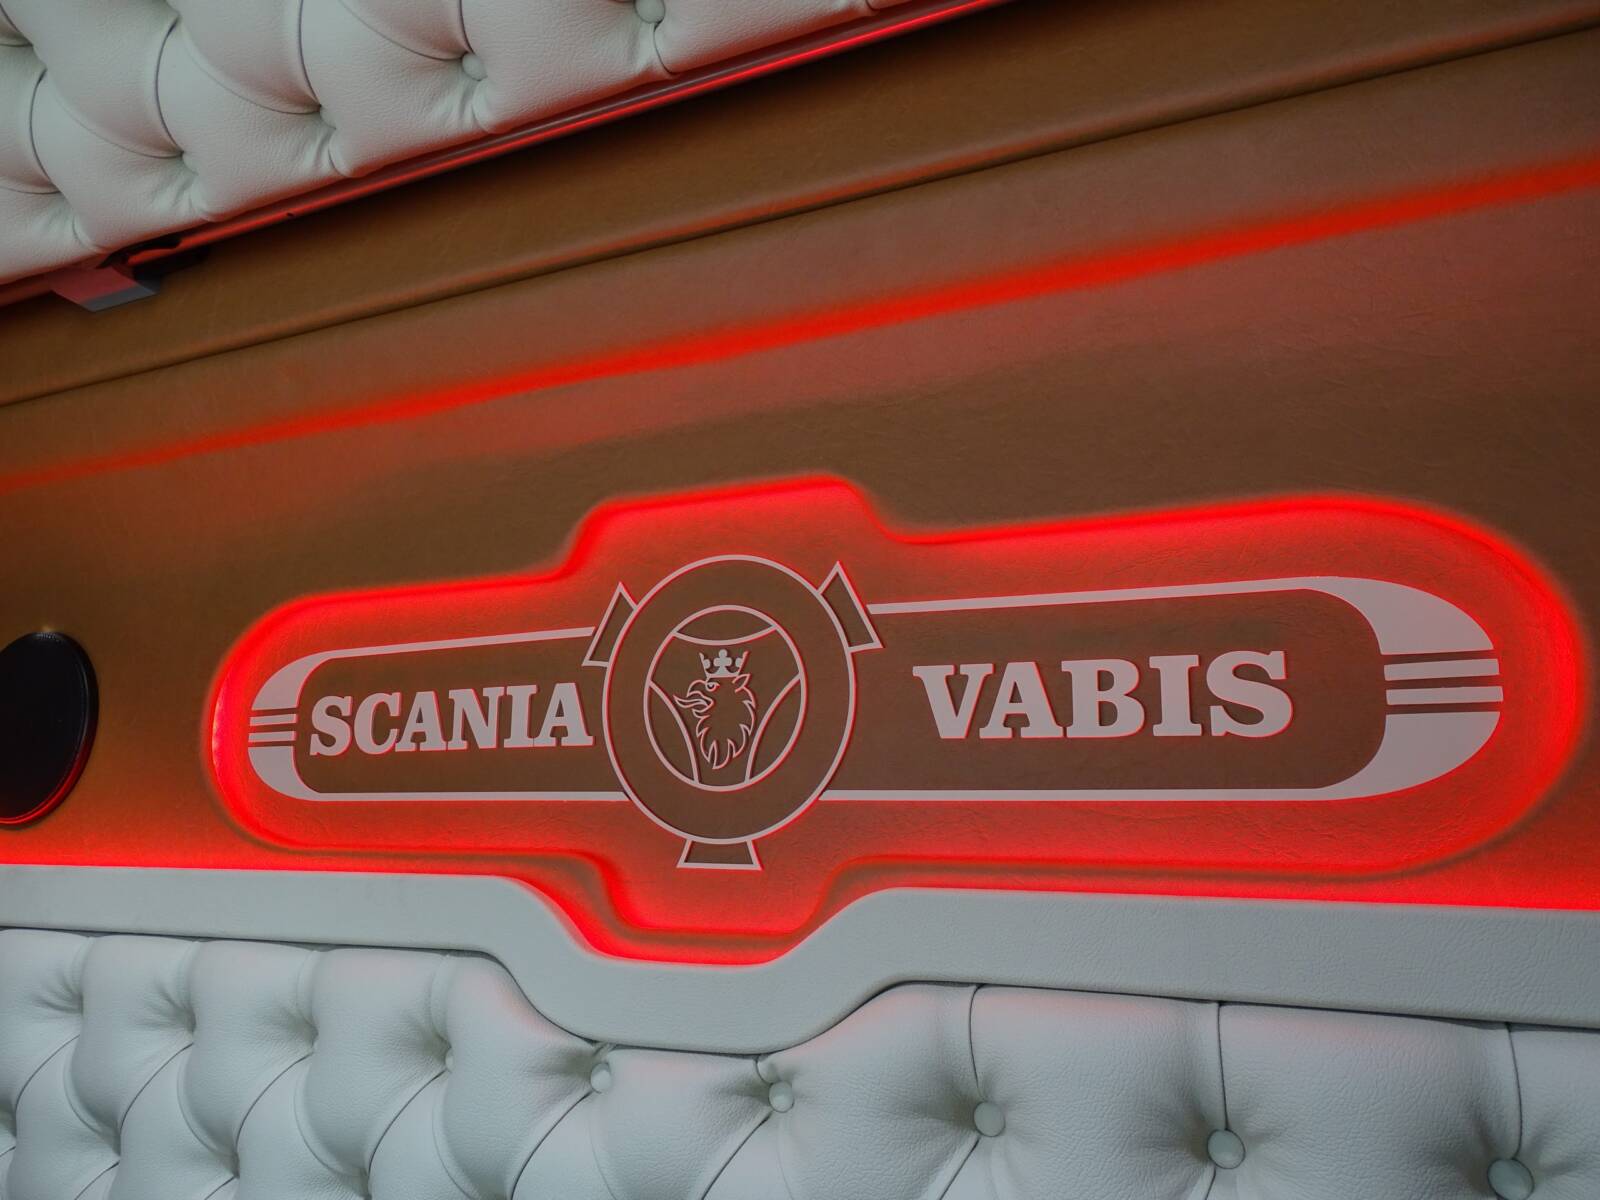 Scania vabis logo